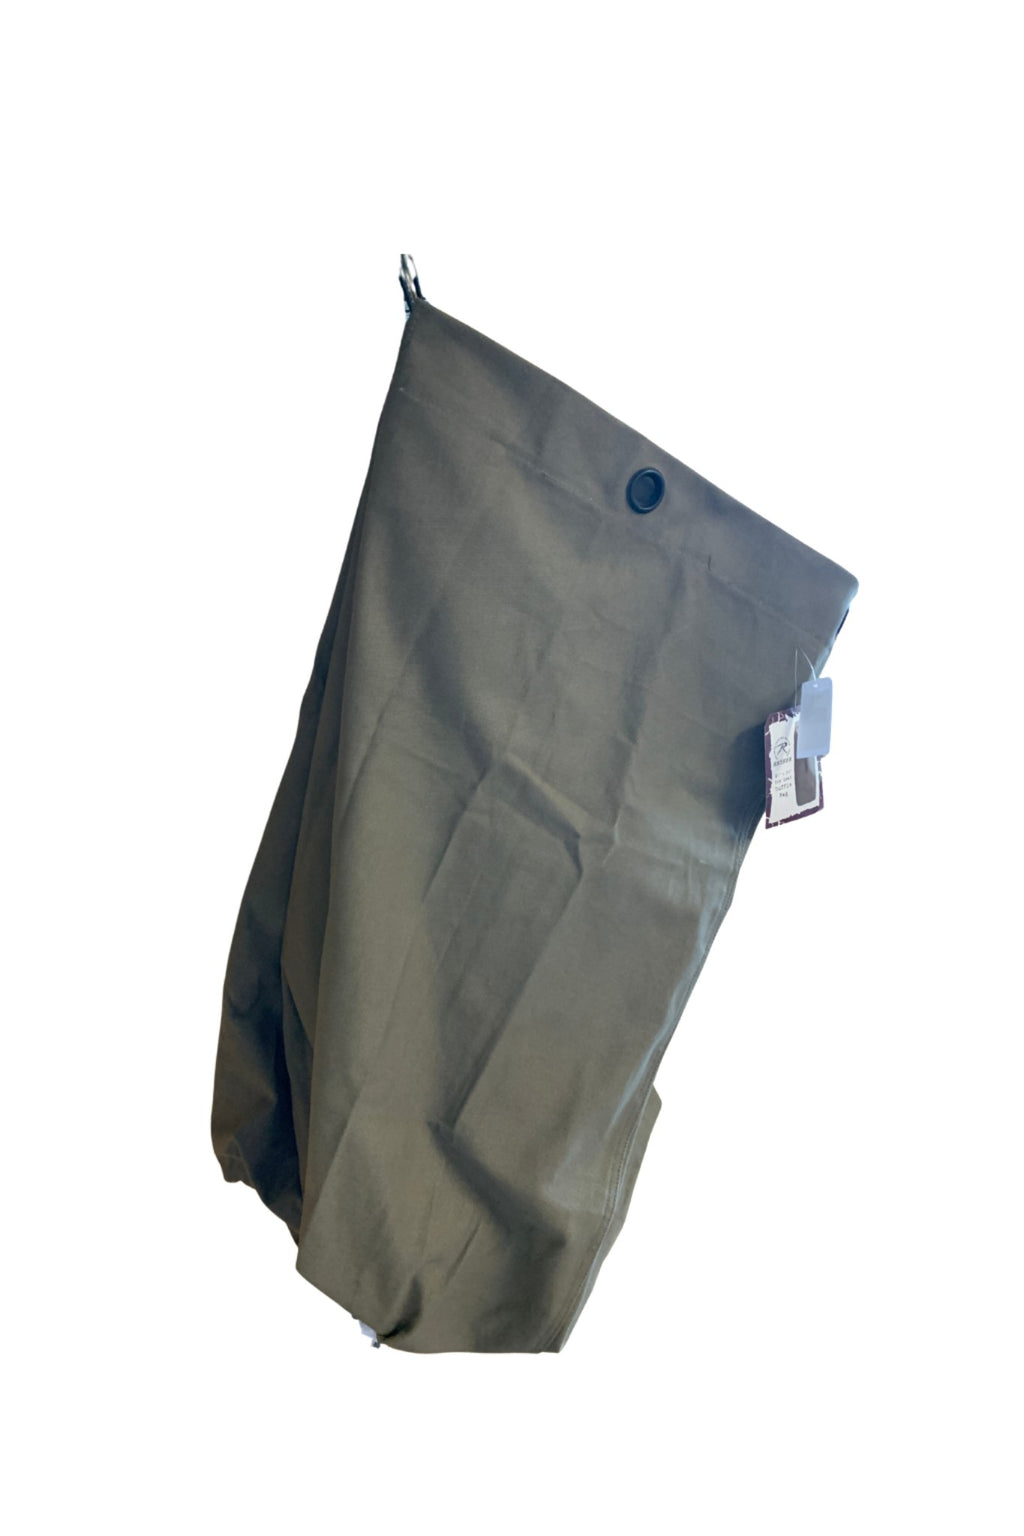 Top Load Green Duffel Bag